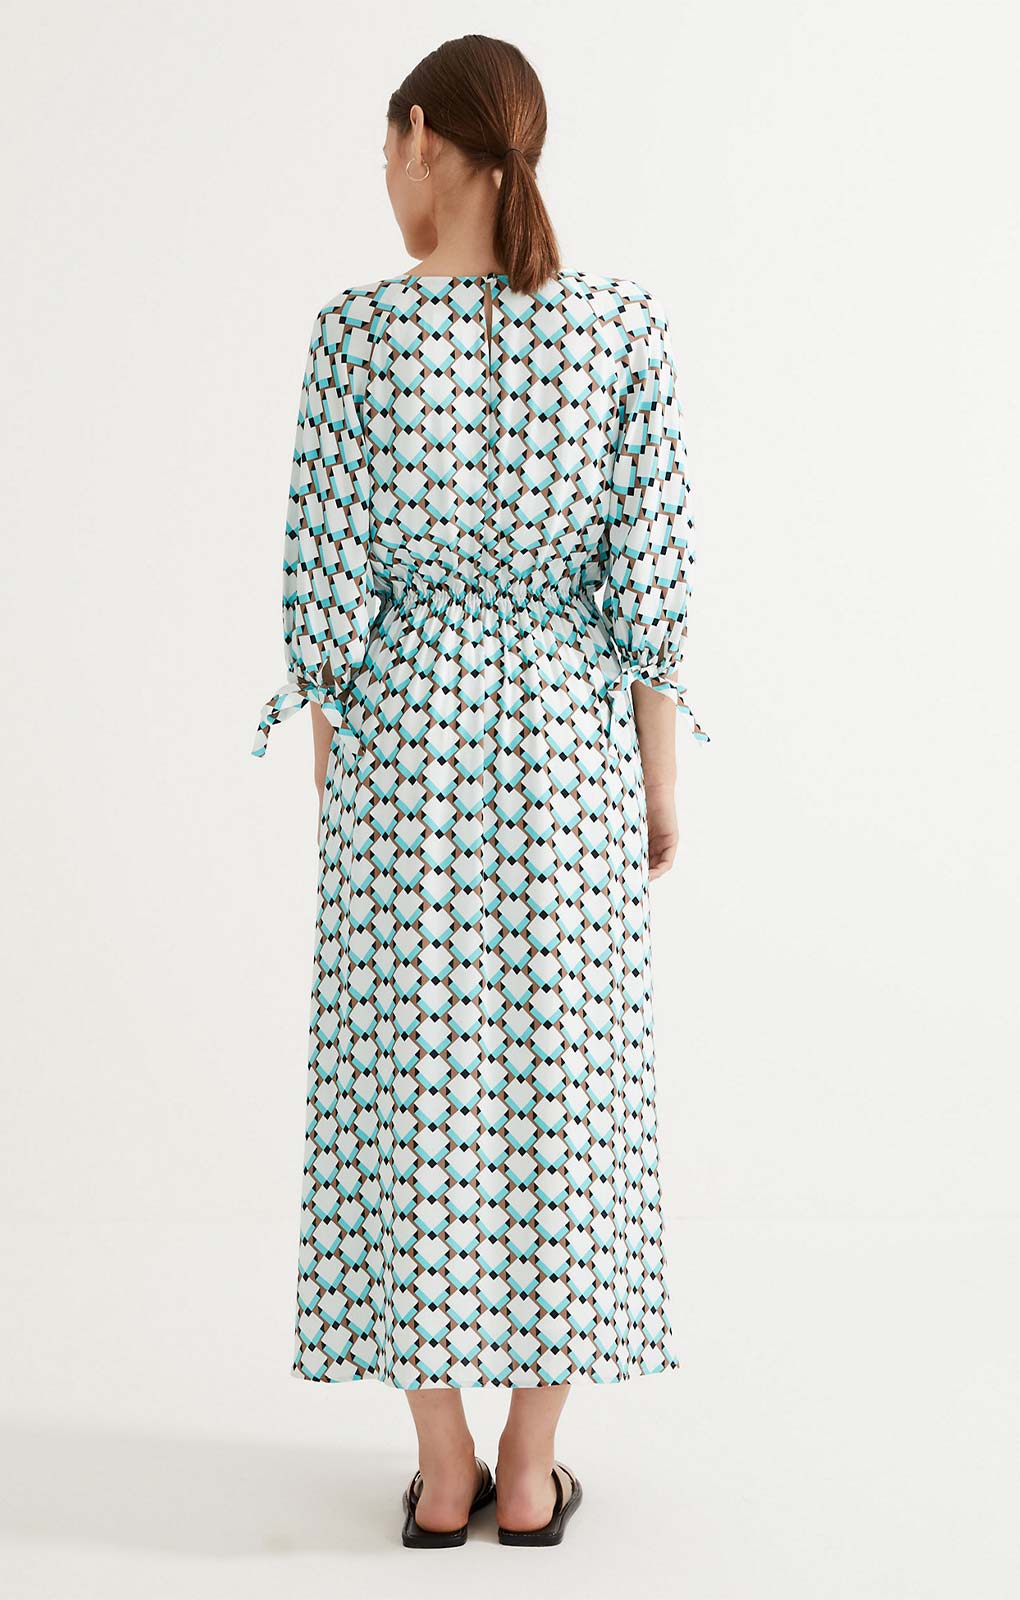 M&S Autograph Geometric V-Neck Midaxi Waisted Dress product image